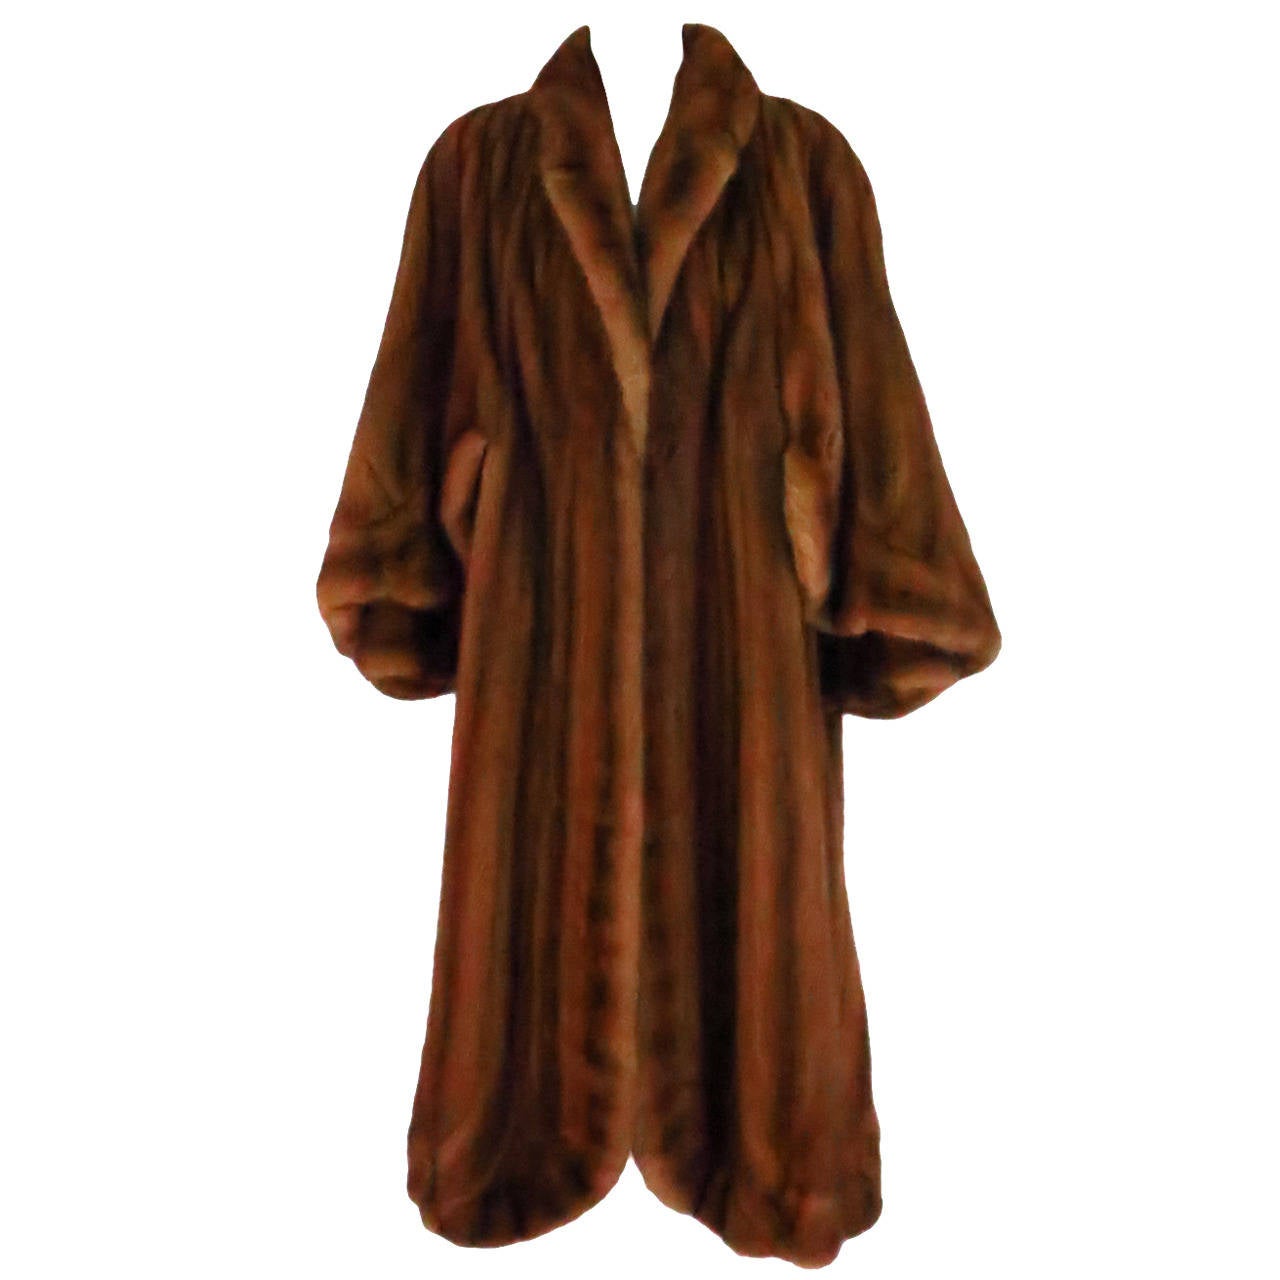 1950s Deep cape back mink coat with scalloped hem